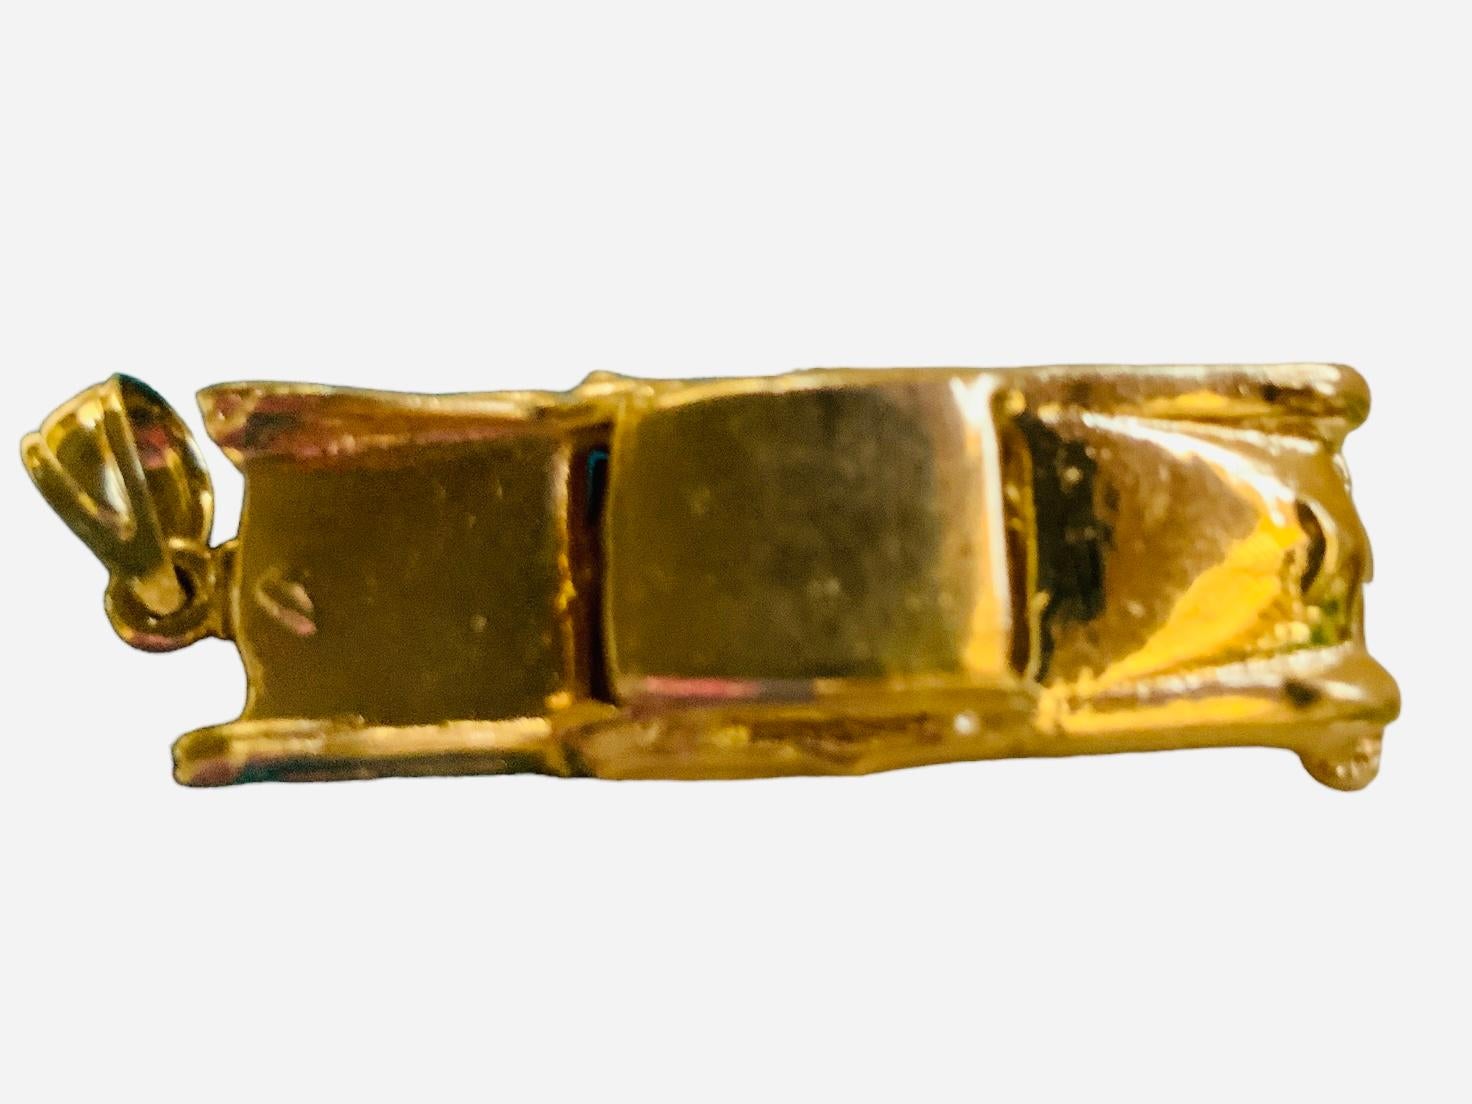 gold cadillac pendant